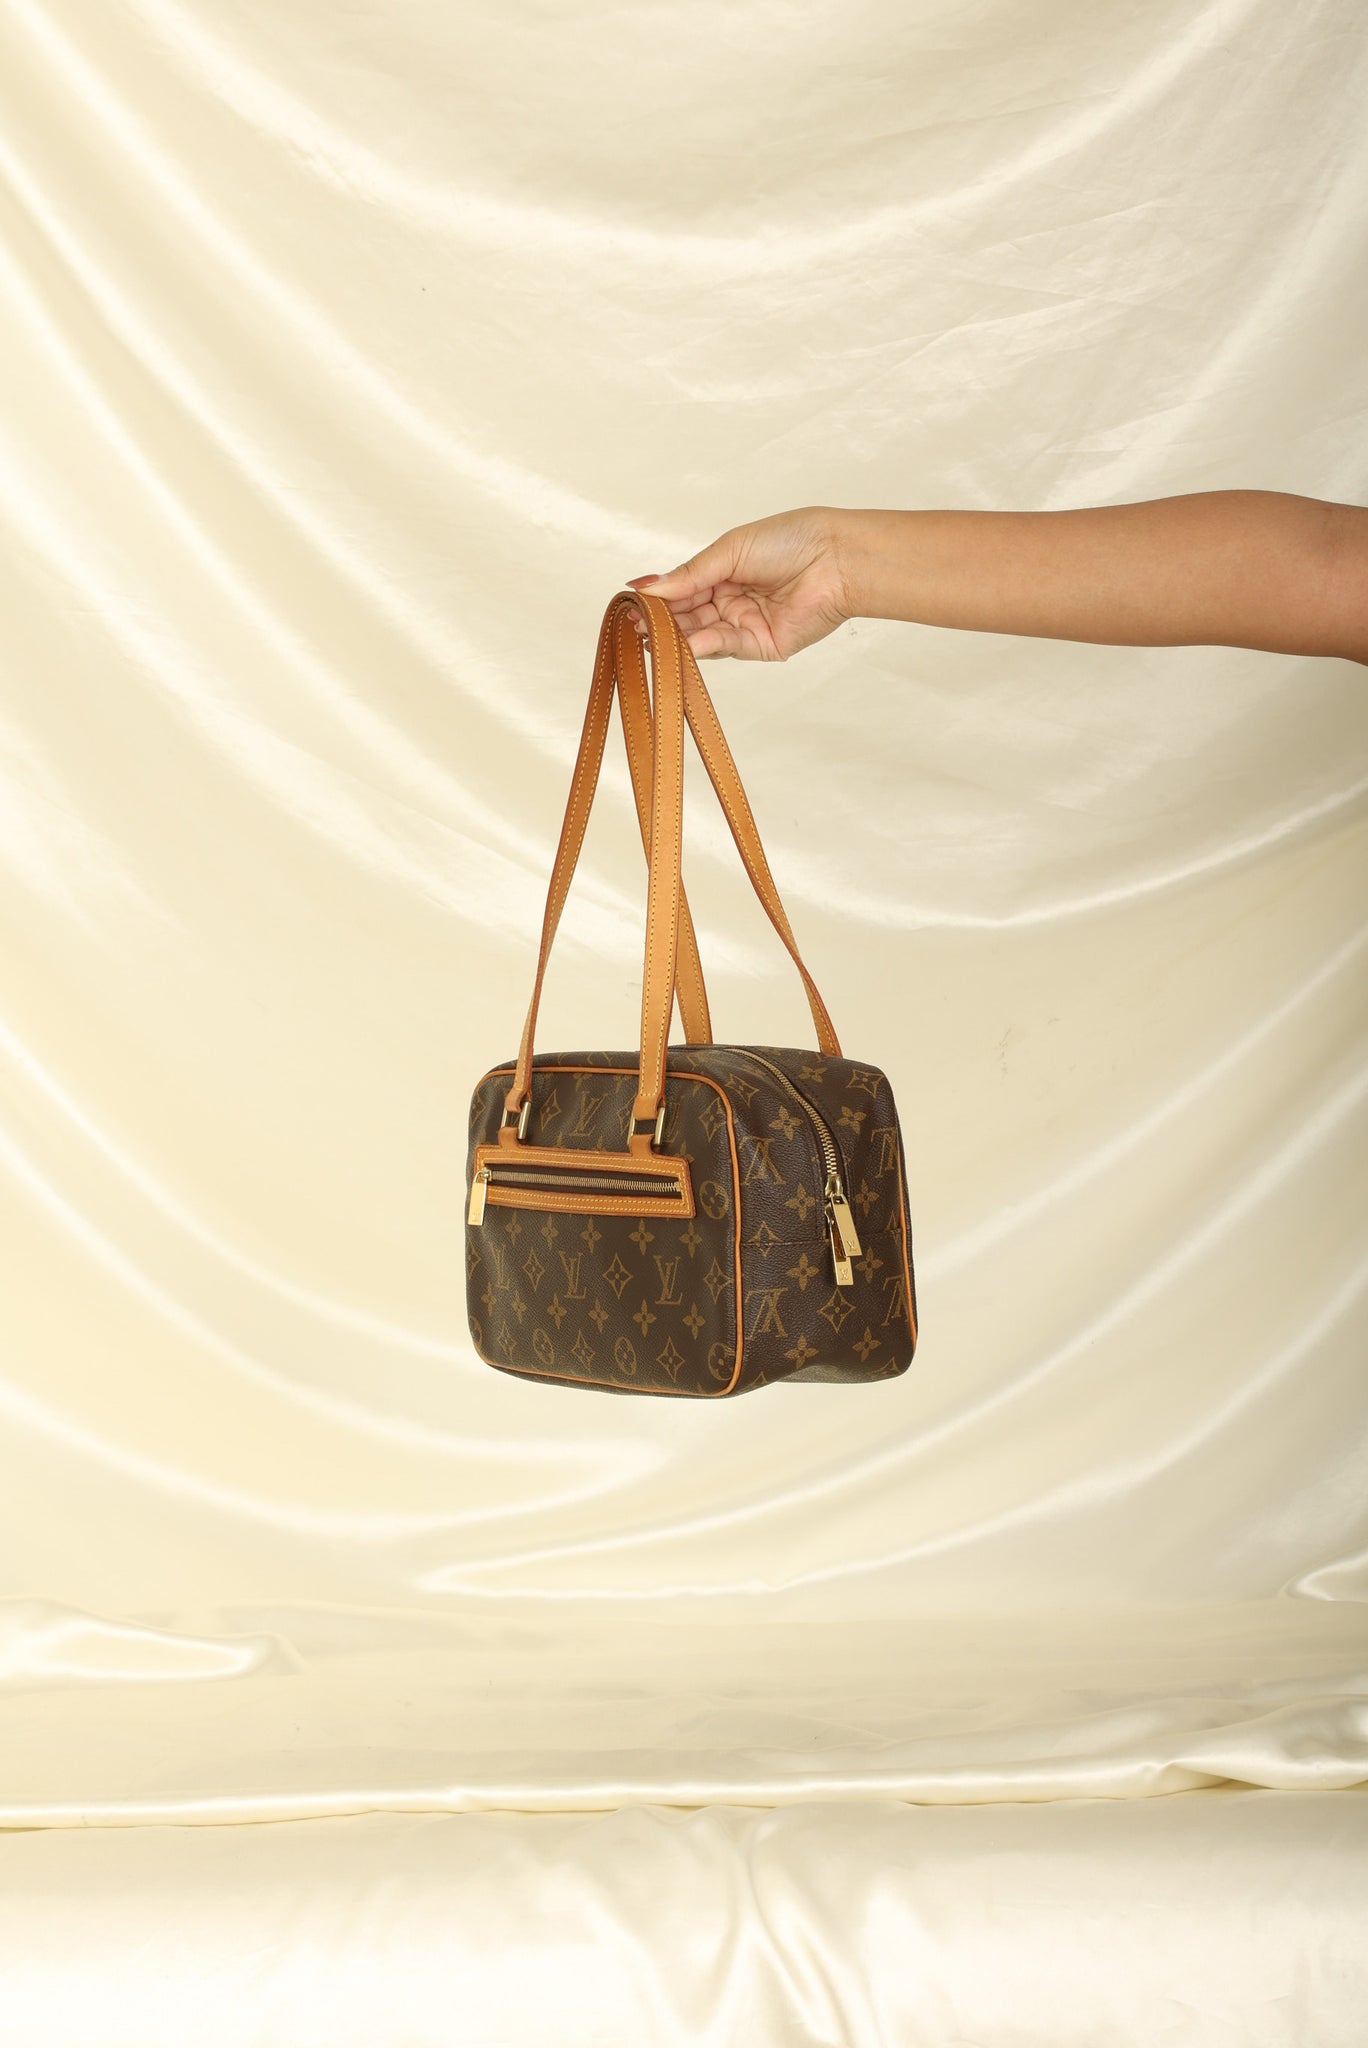 Louis Vuitton Small Cite MM Bag